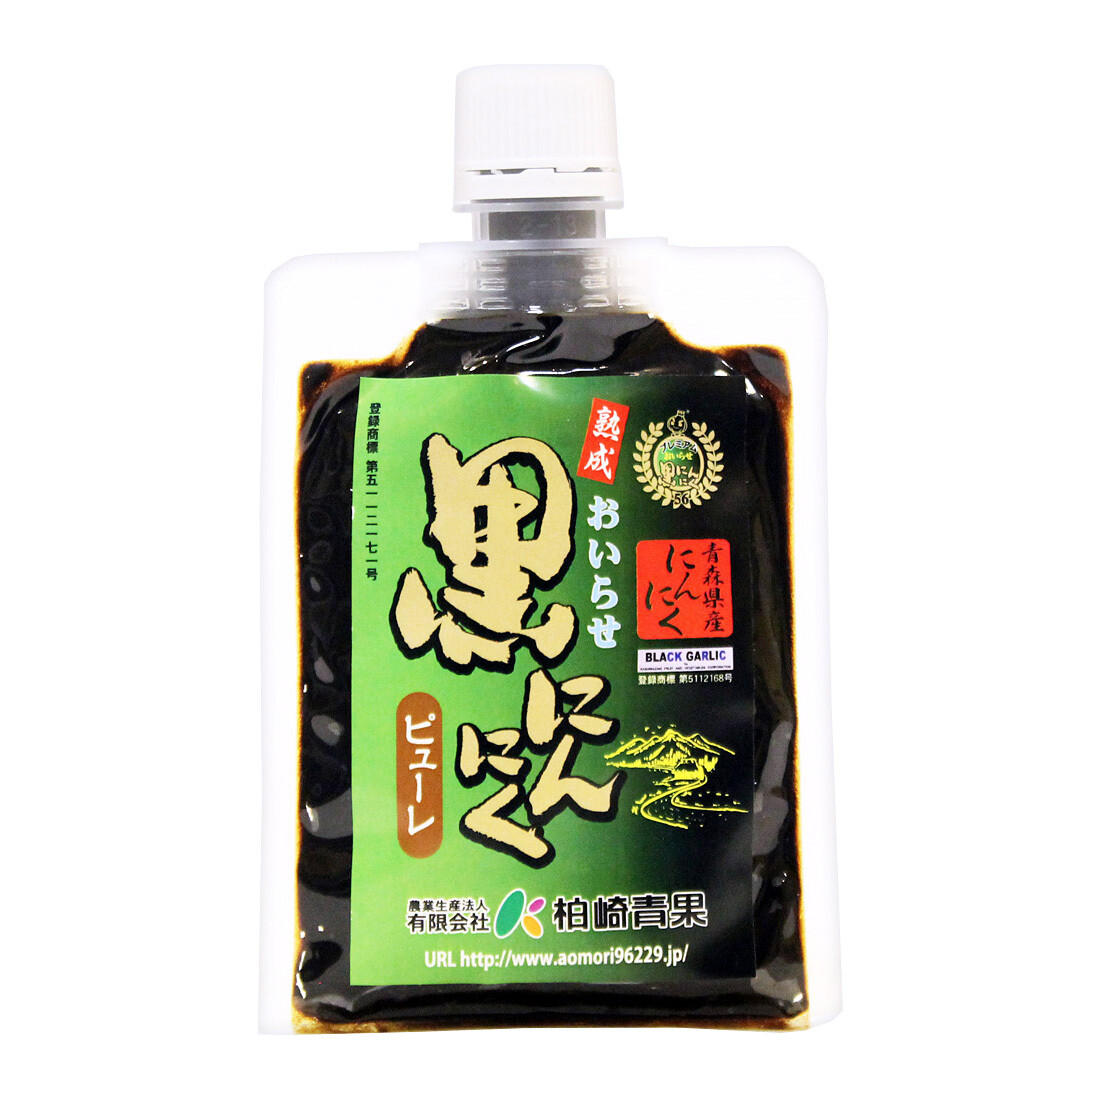 Aomori Musta Valkosipulitahna | Aomori Black Garlic Puree | UMAMI | 80g